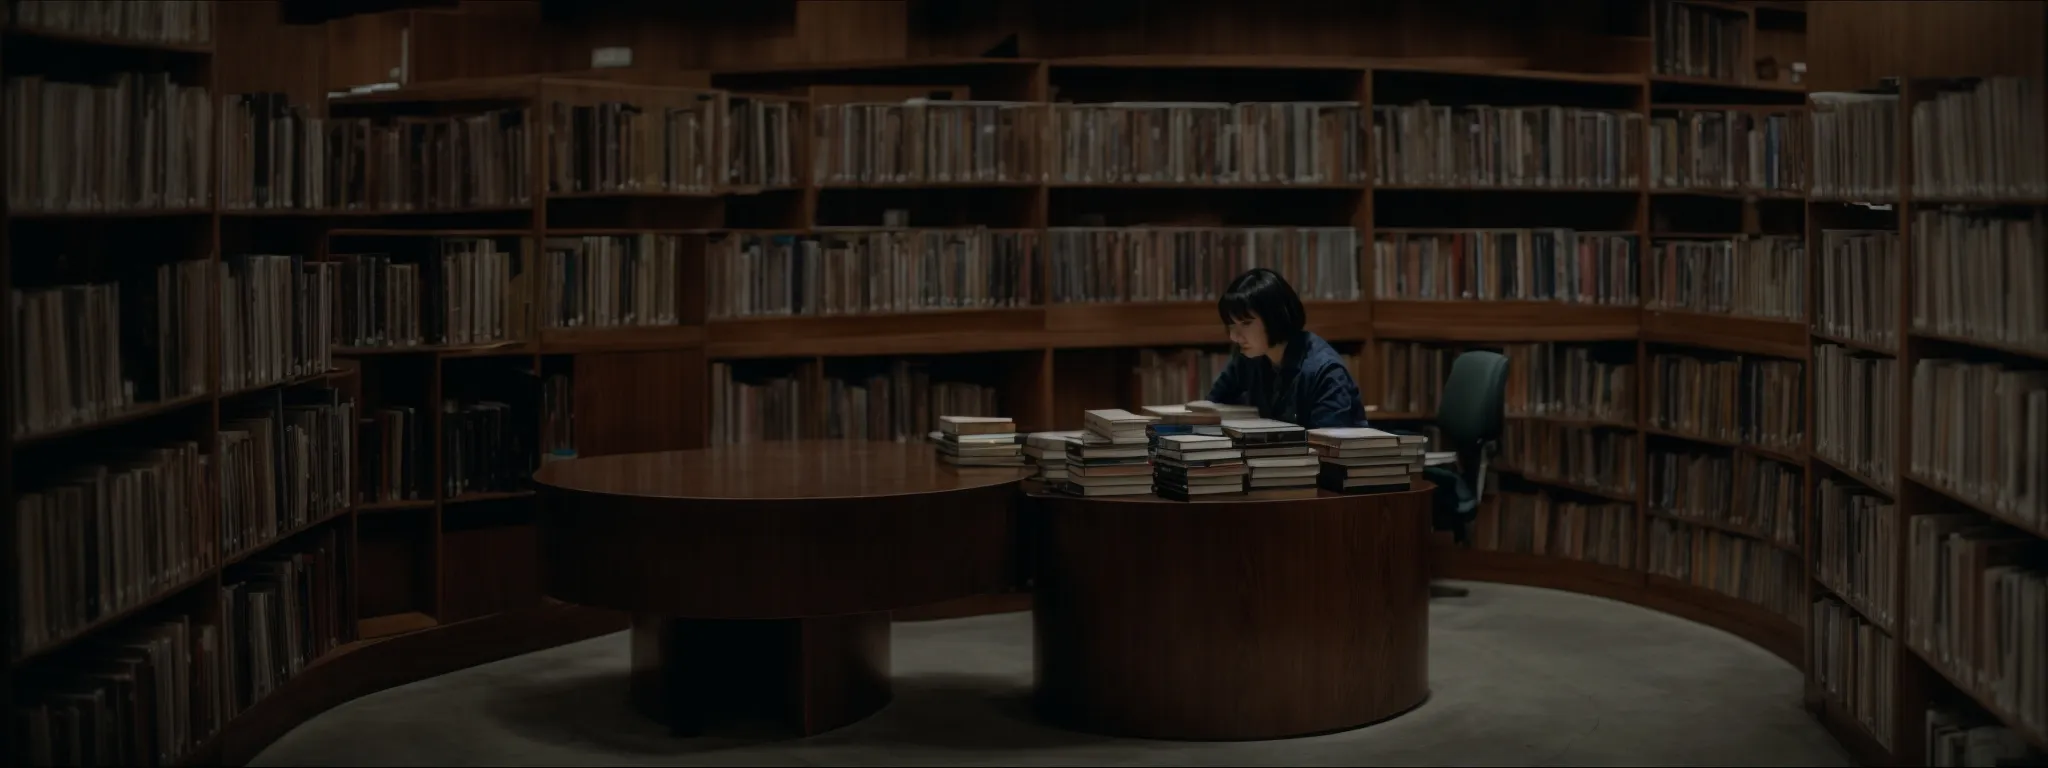 a librarian organizing books around a central subject on a circular bookshelf.